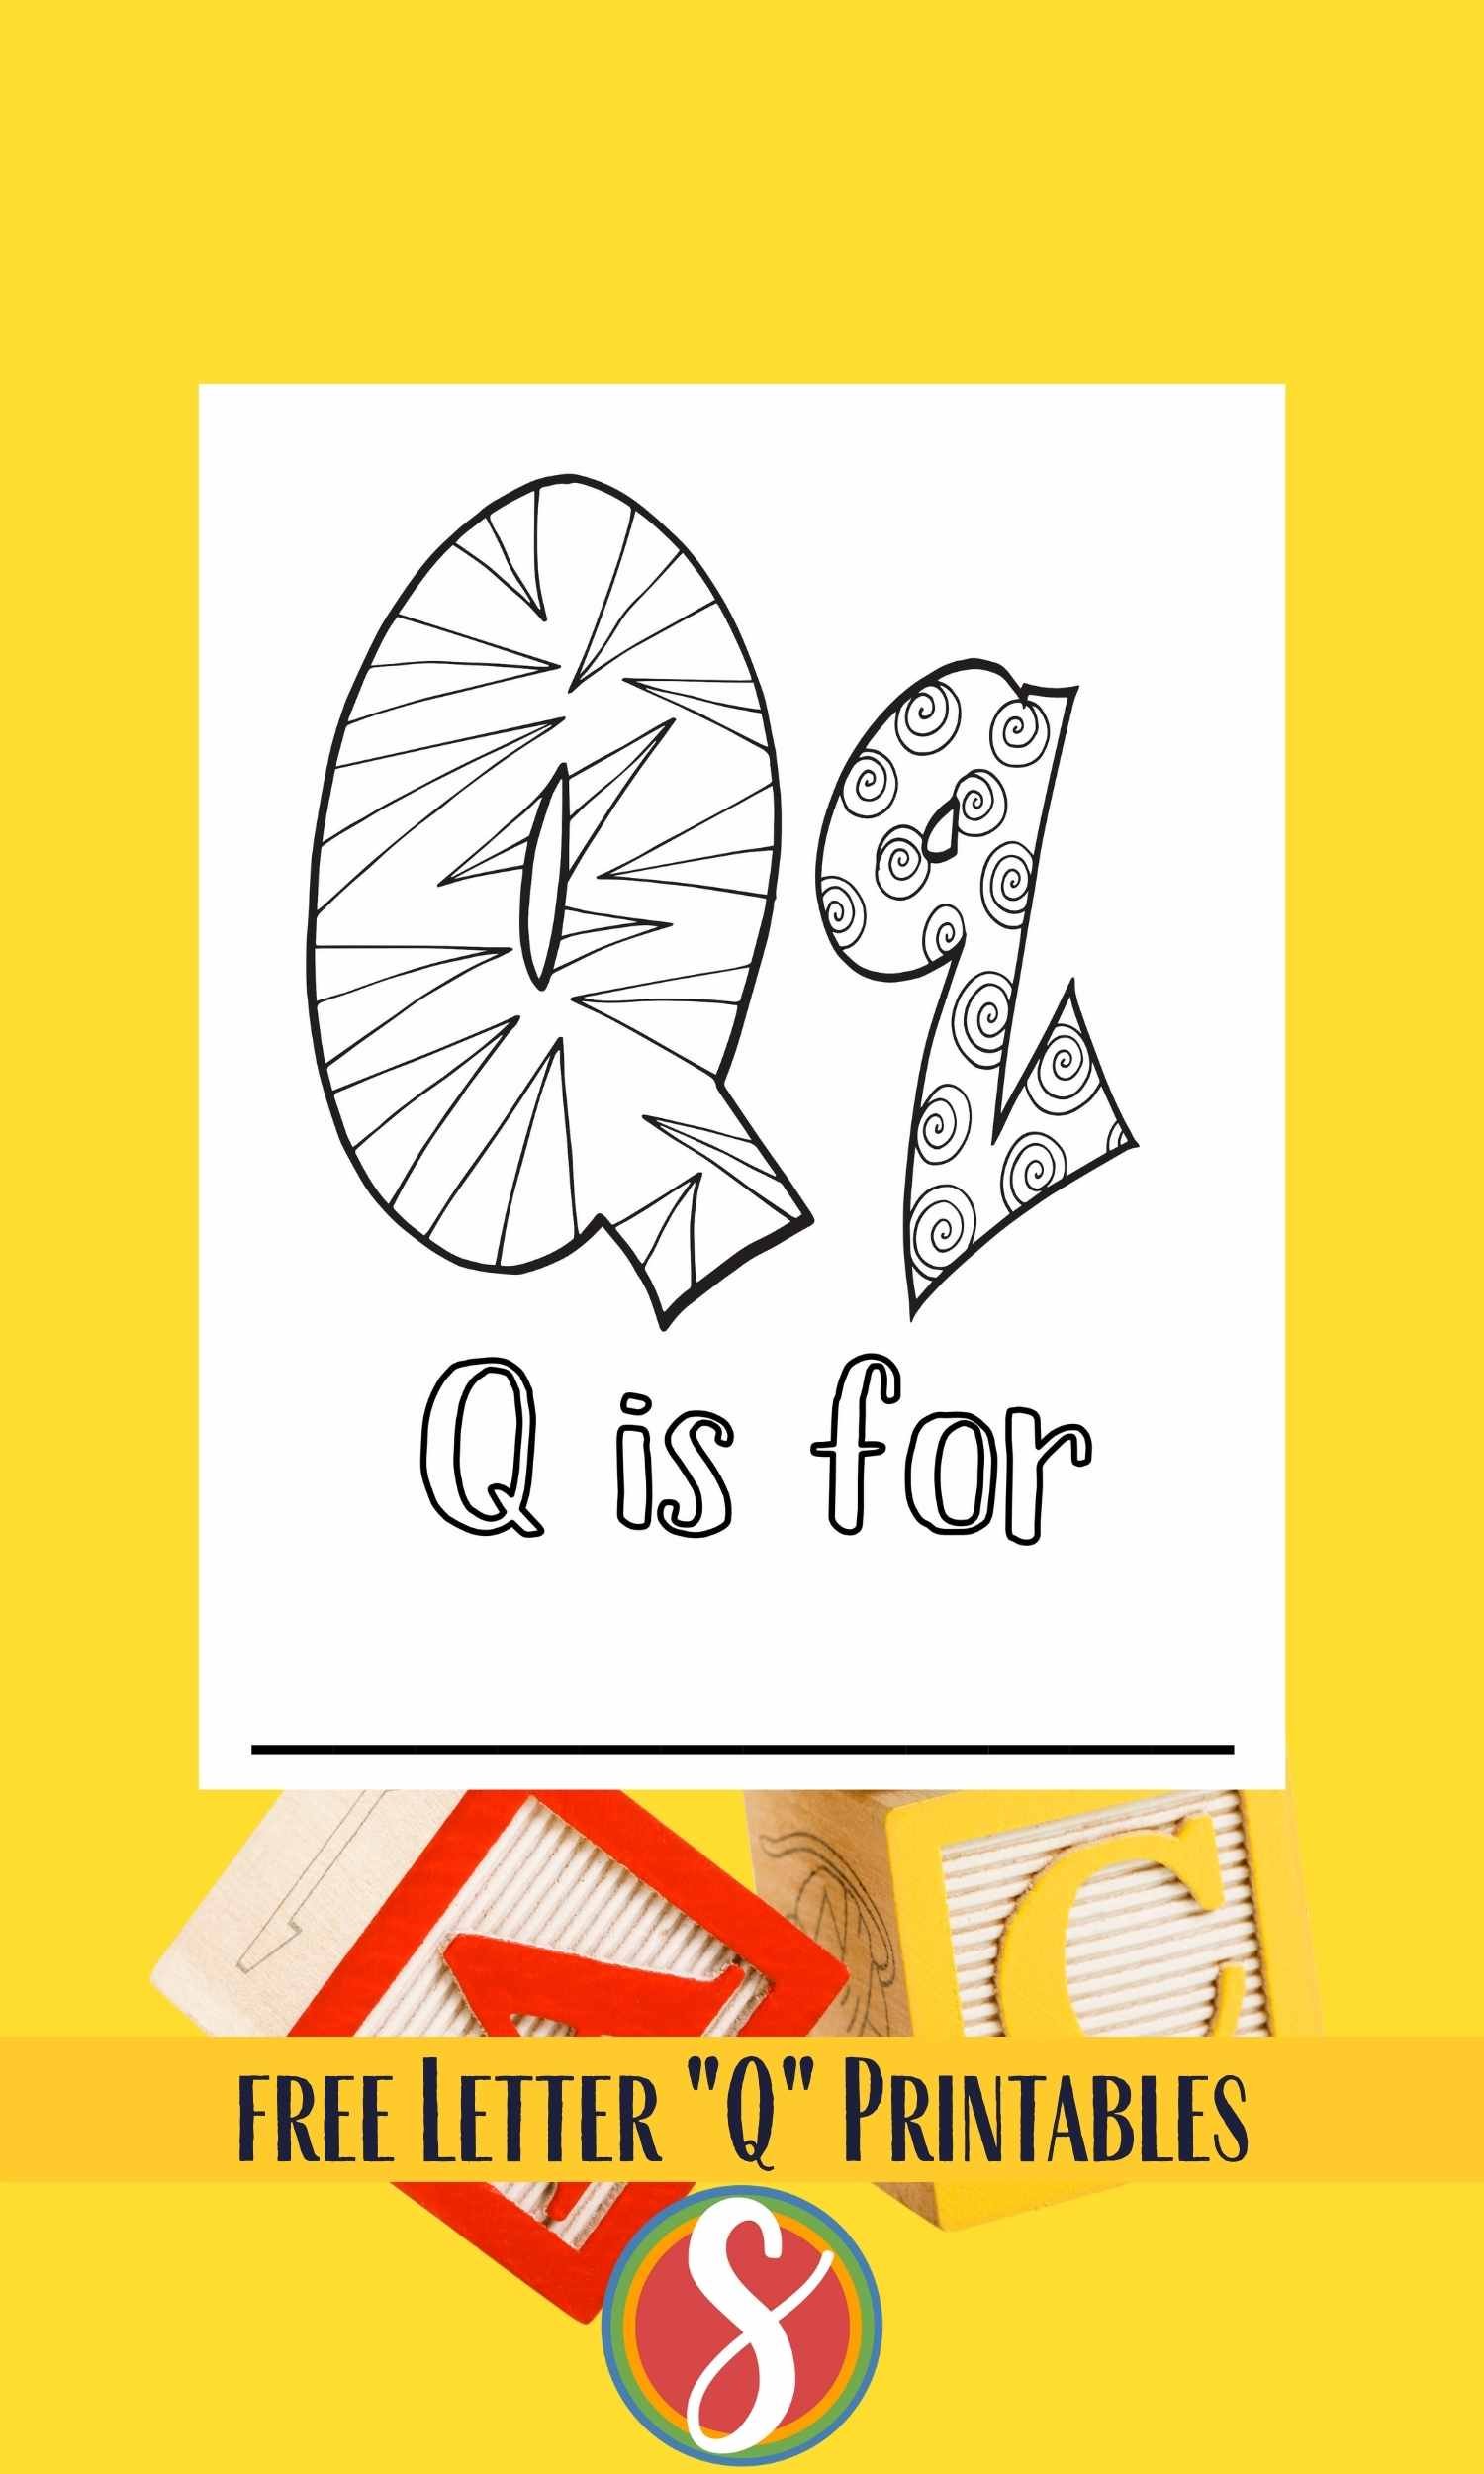 Bubble letters "Qq" with doodles inside to color